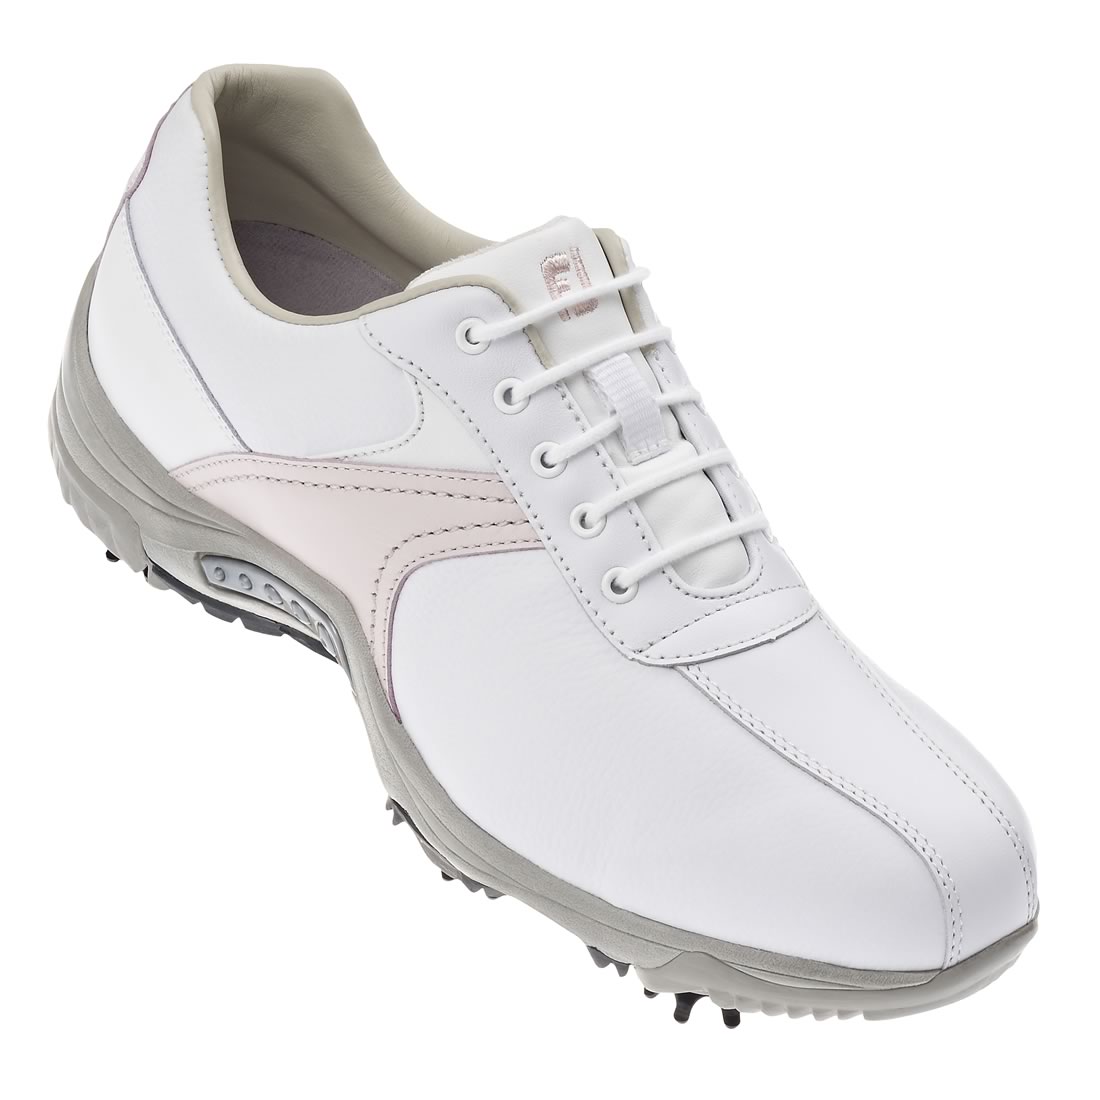 FootJoy Ladies Contour Golf Shoes White/Pink